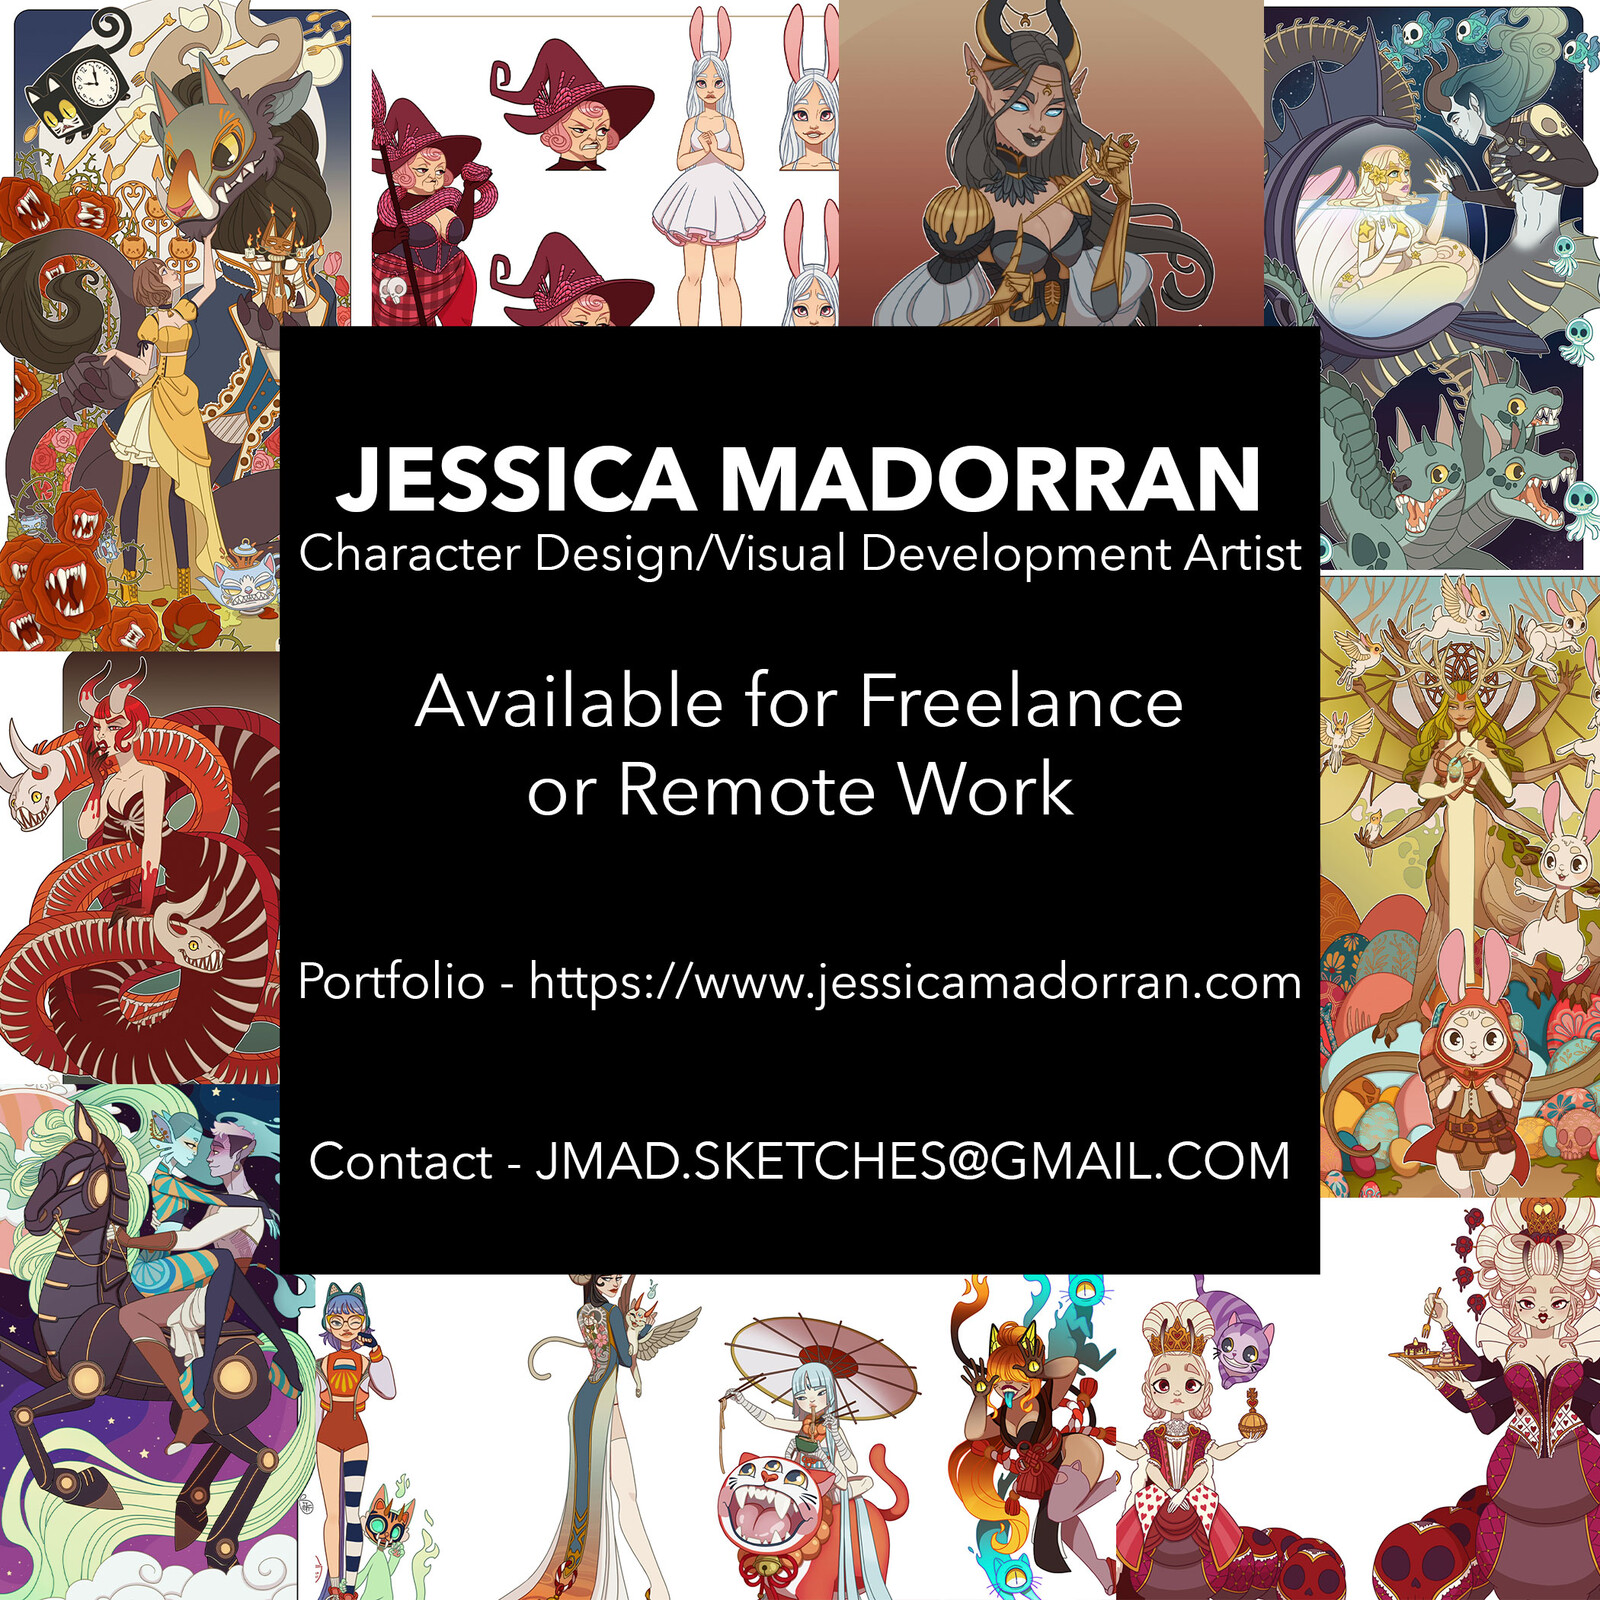 Character Design/Visual Development Artist - Jessica Madorran